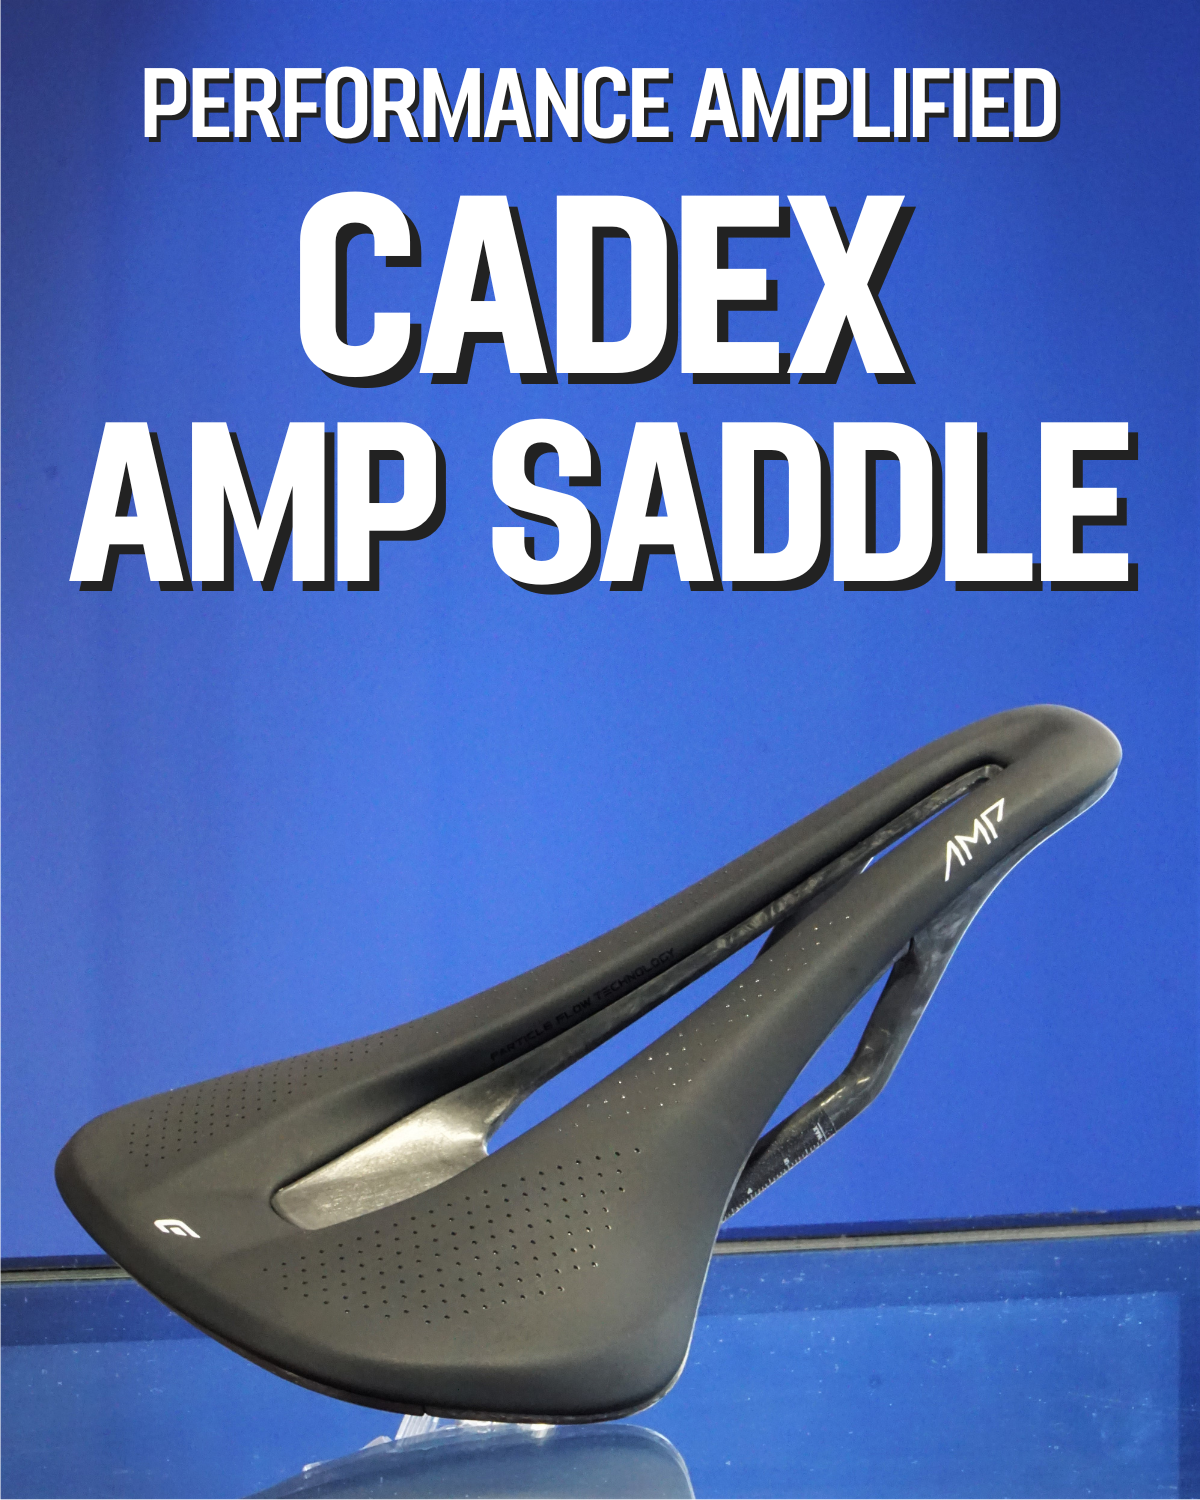 CADEX 第2のサドル登場！プロトタイプが話題を呼んだ超軽量カーボン